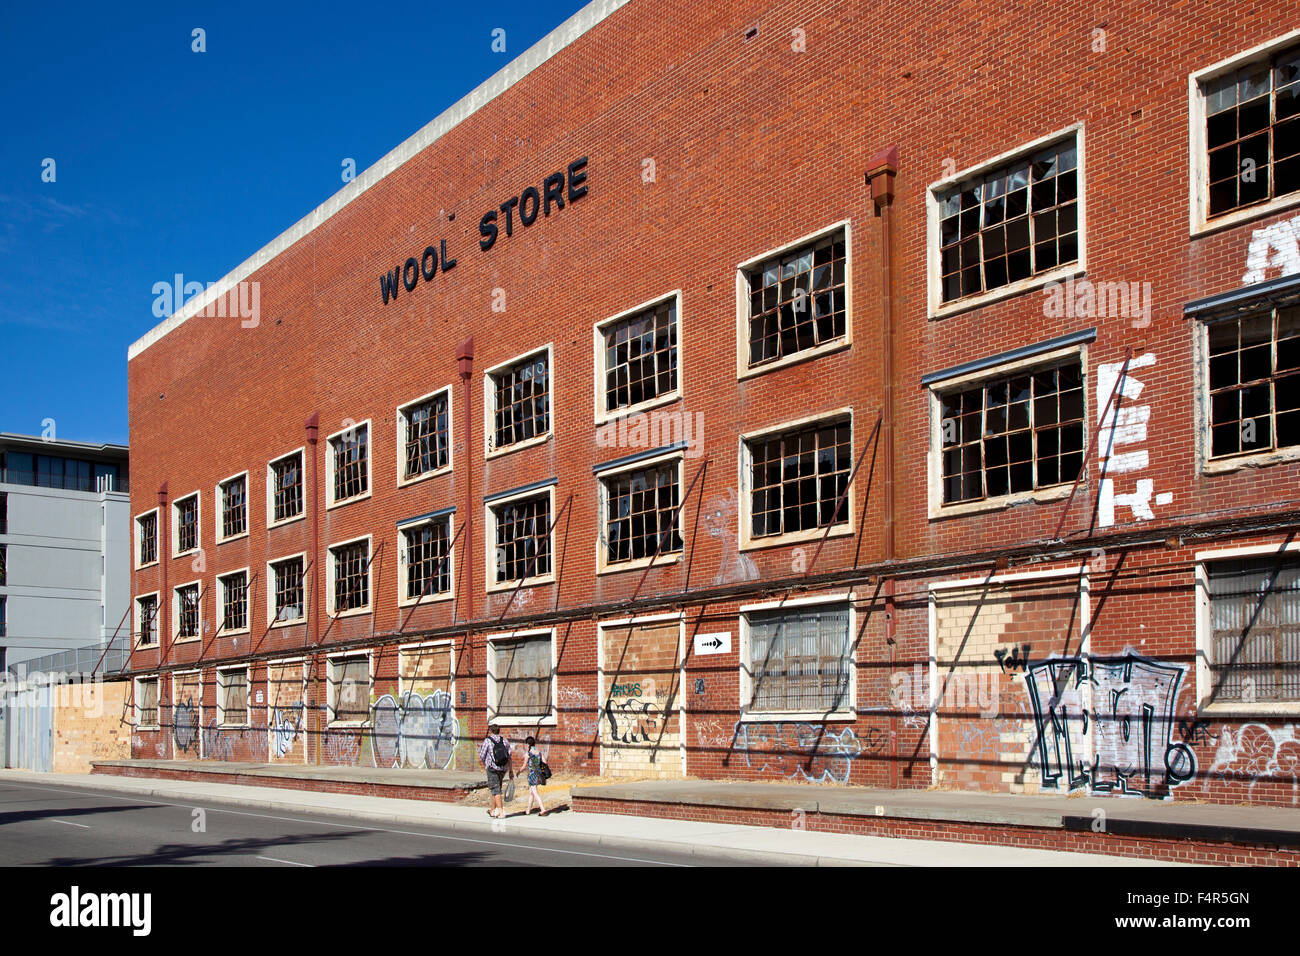 Australia, Fremantle, calle, edificio abandonado, antiguo almacén de lana, fachada, tapiadas, ventanas rotas, ladrillos, ladrillos rojos Foto de stock